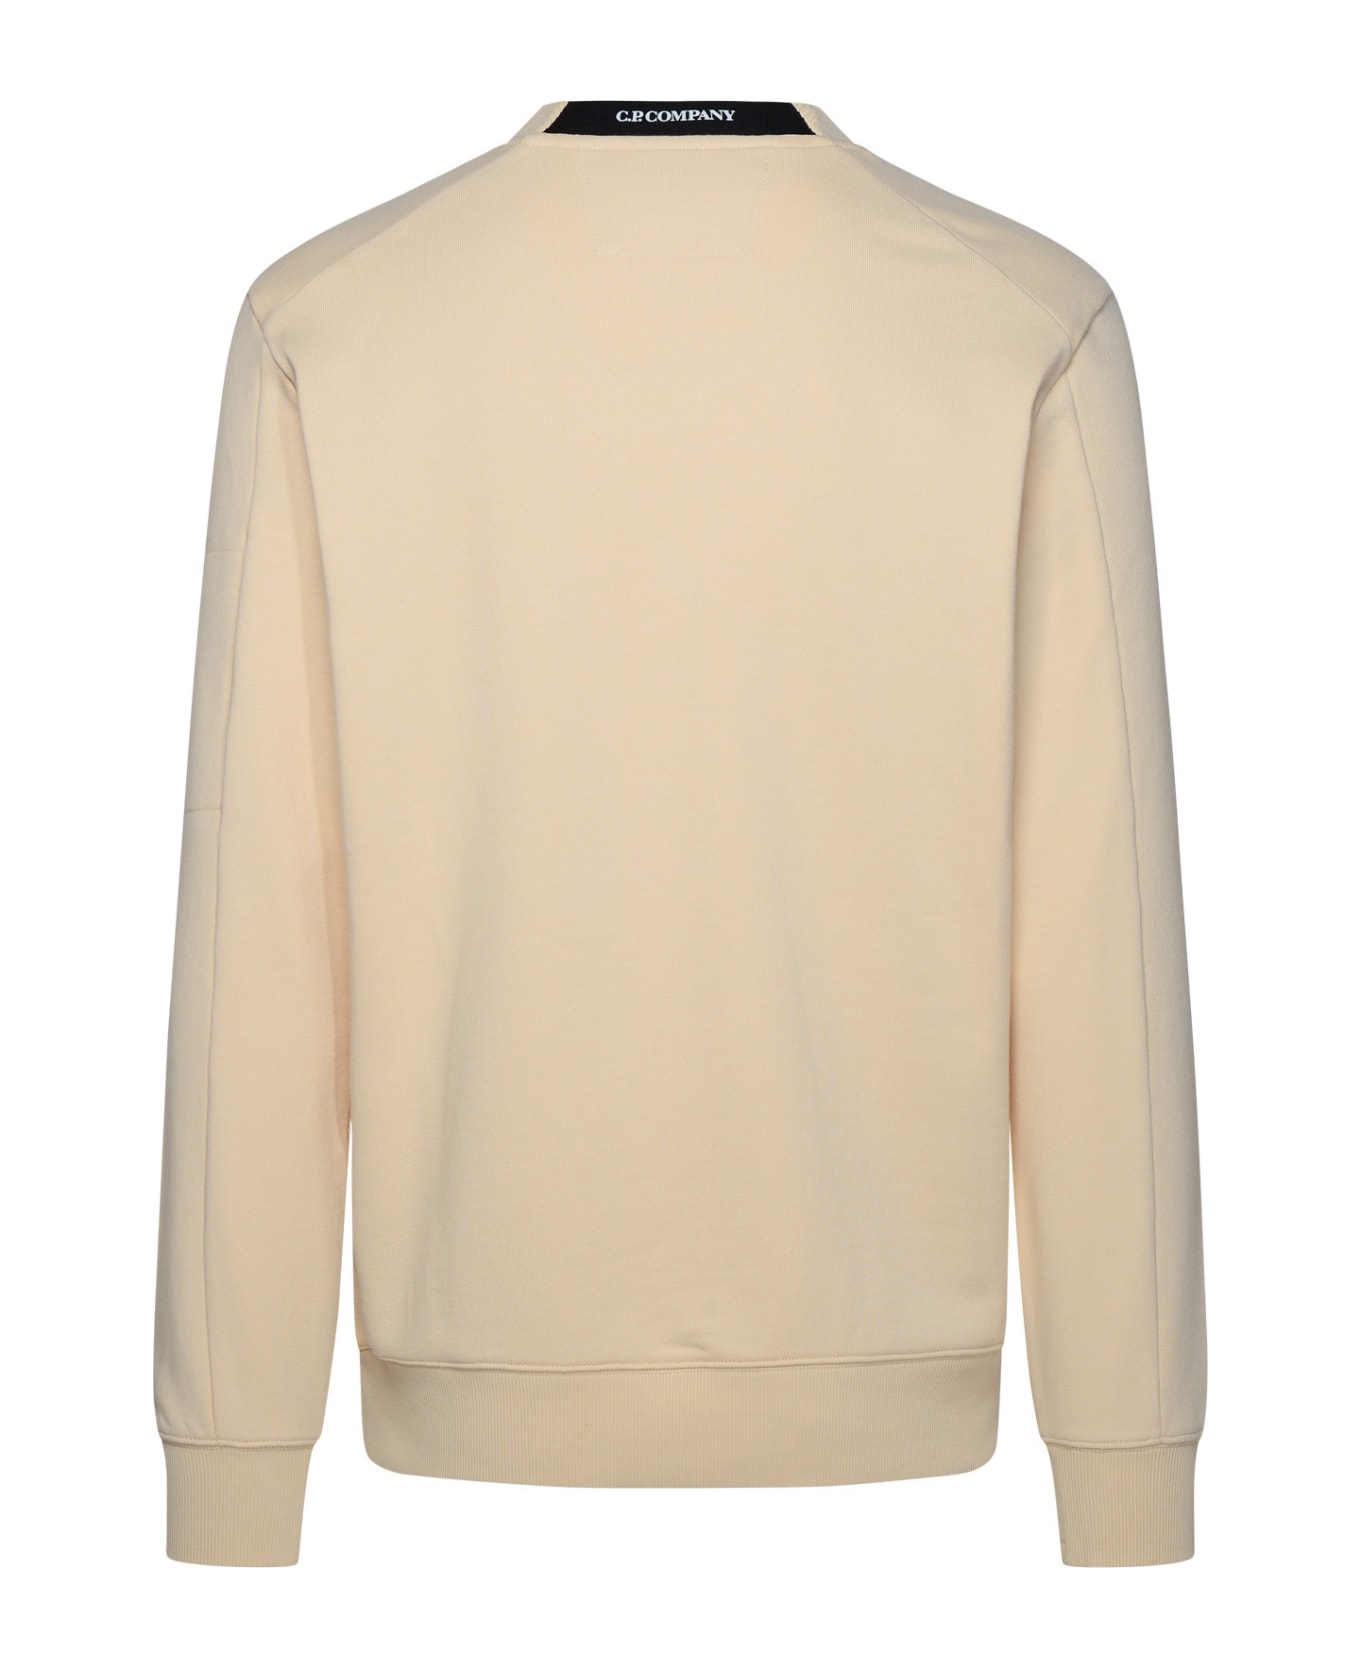 C.P. Company 'diagonal Raised Fleece' Beige Cotton Sweatshirt - PISTACHIO SHELL ニットウェア